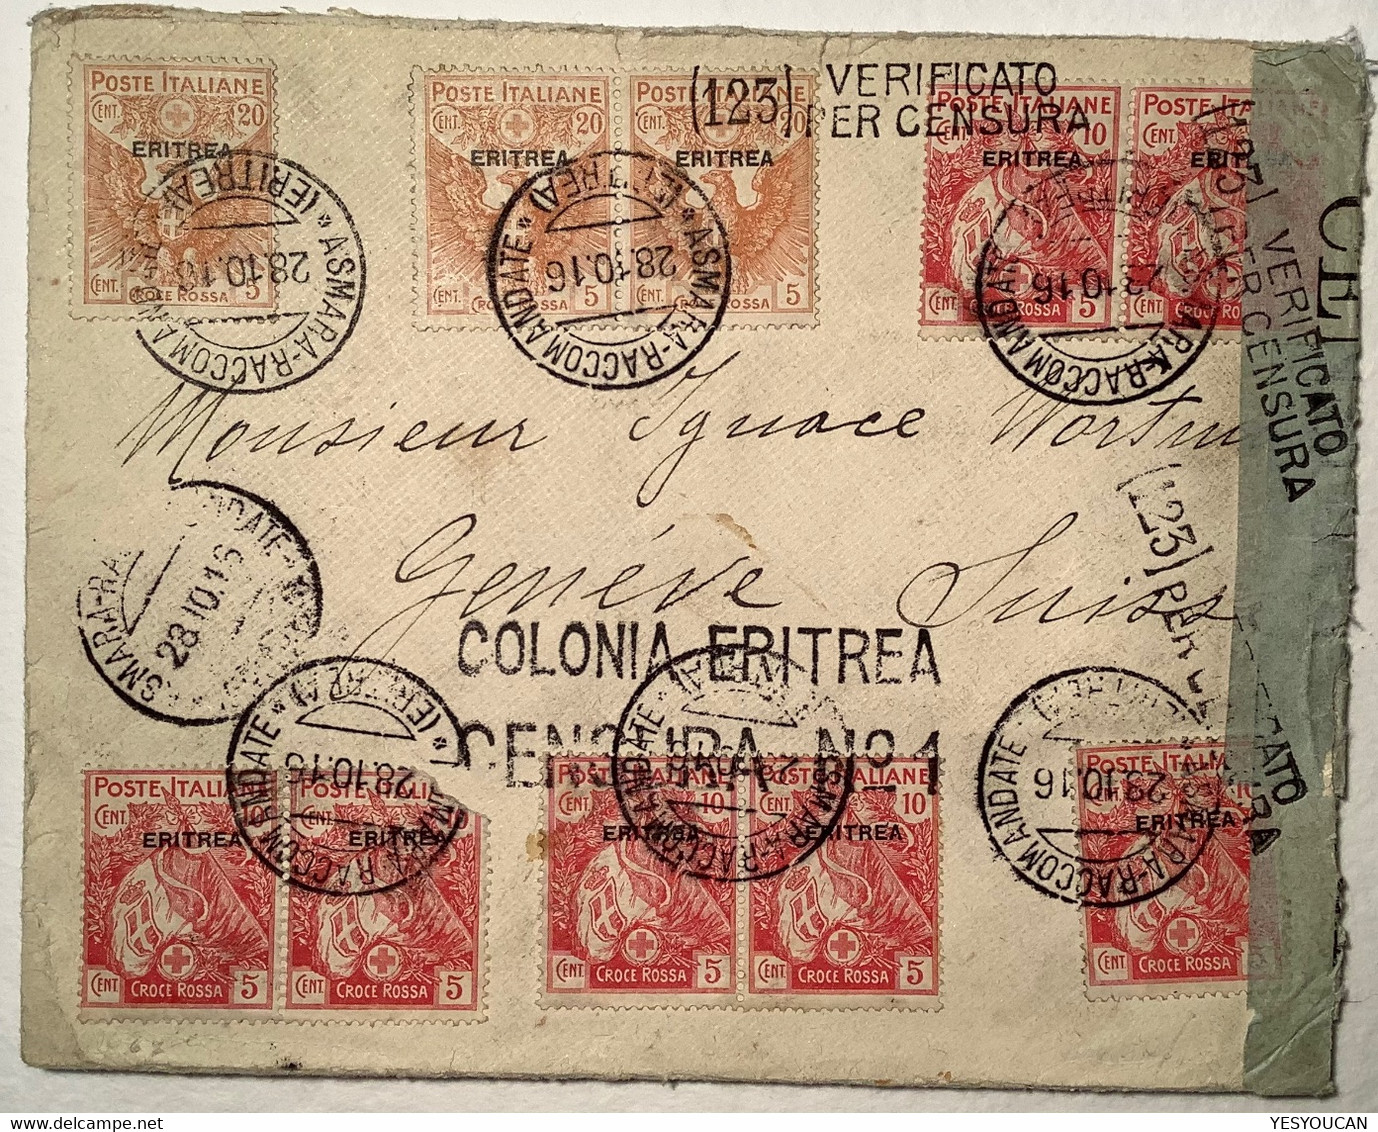 RARE RED CROSS  "ASMARA ERITREA 1916"Sa.41 44 Croce Rossa Censored Cover (lettera Censura Erythrée Lettre Croix Rouge - Erythrée